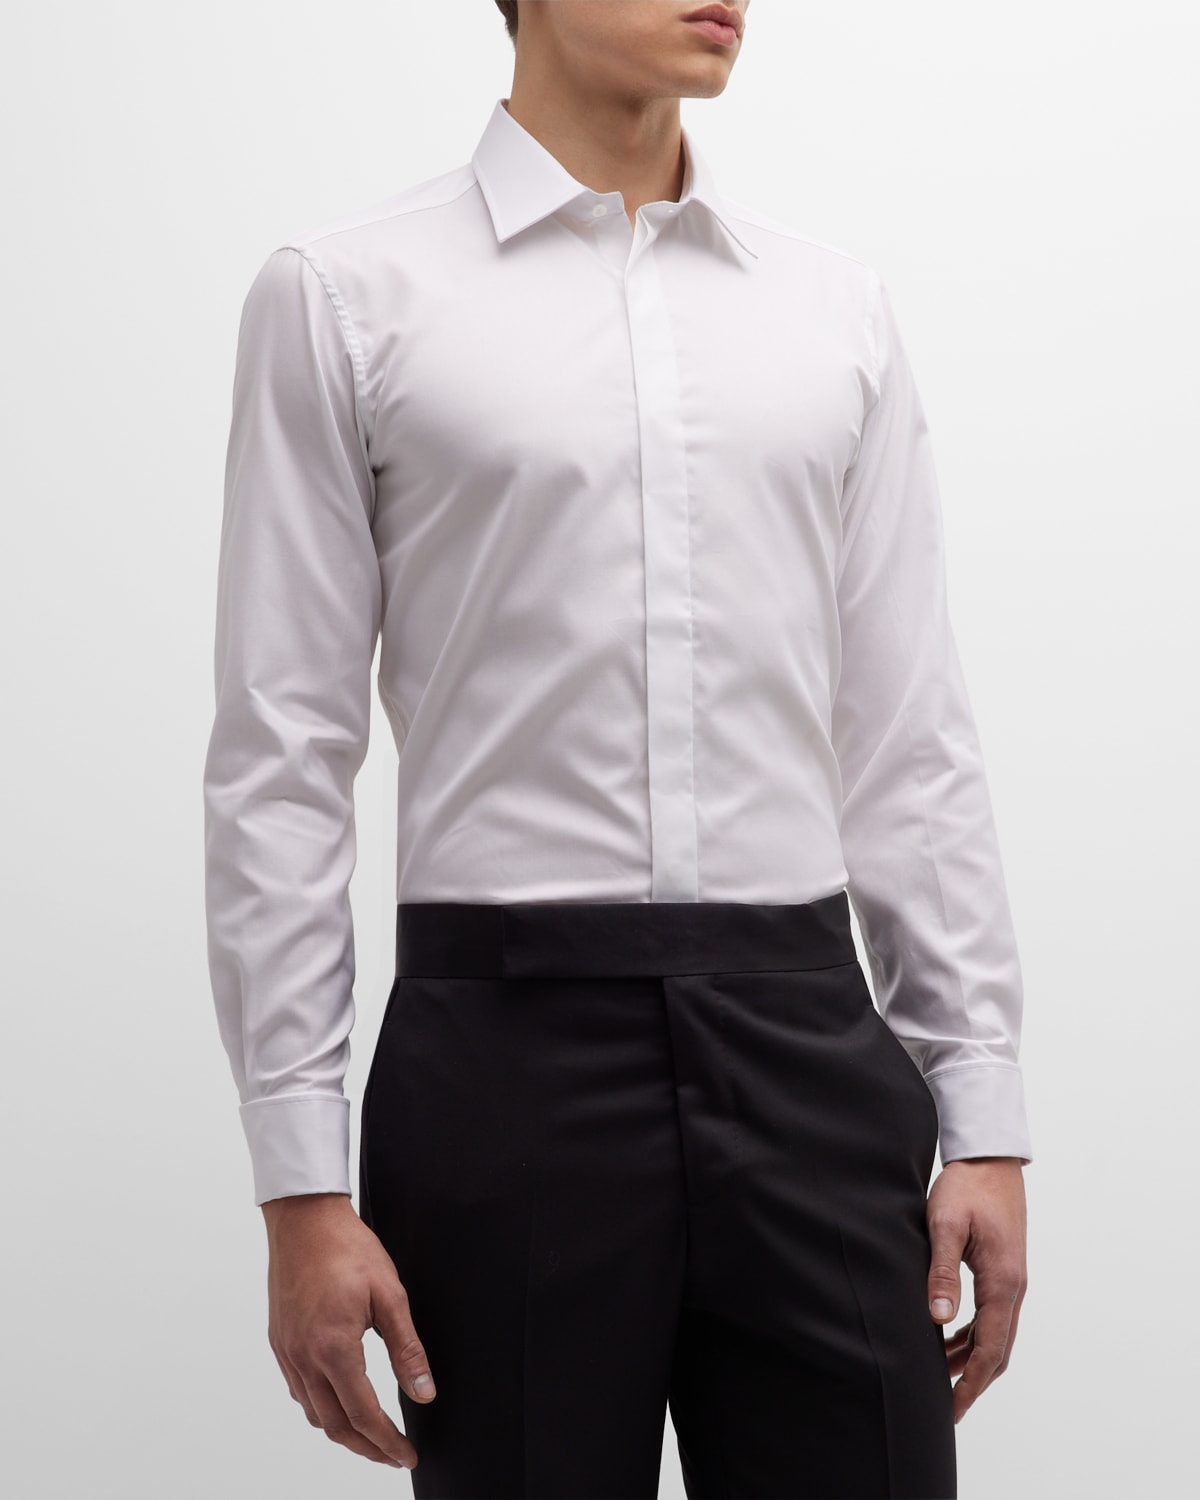 Men's Slim Fit Covered Placket Dress Shirt